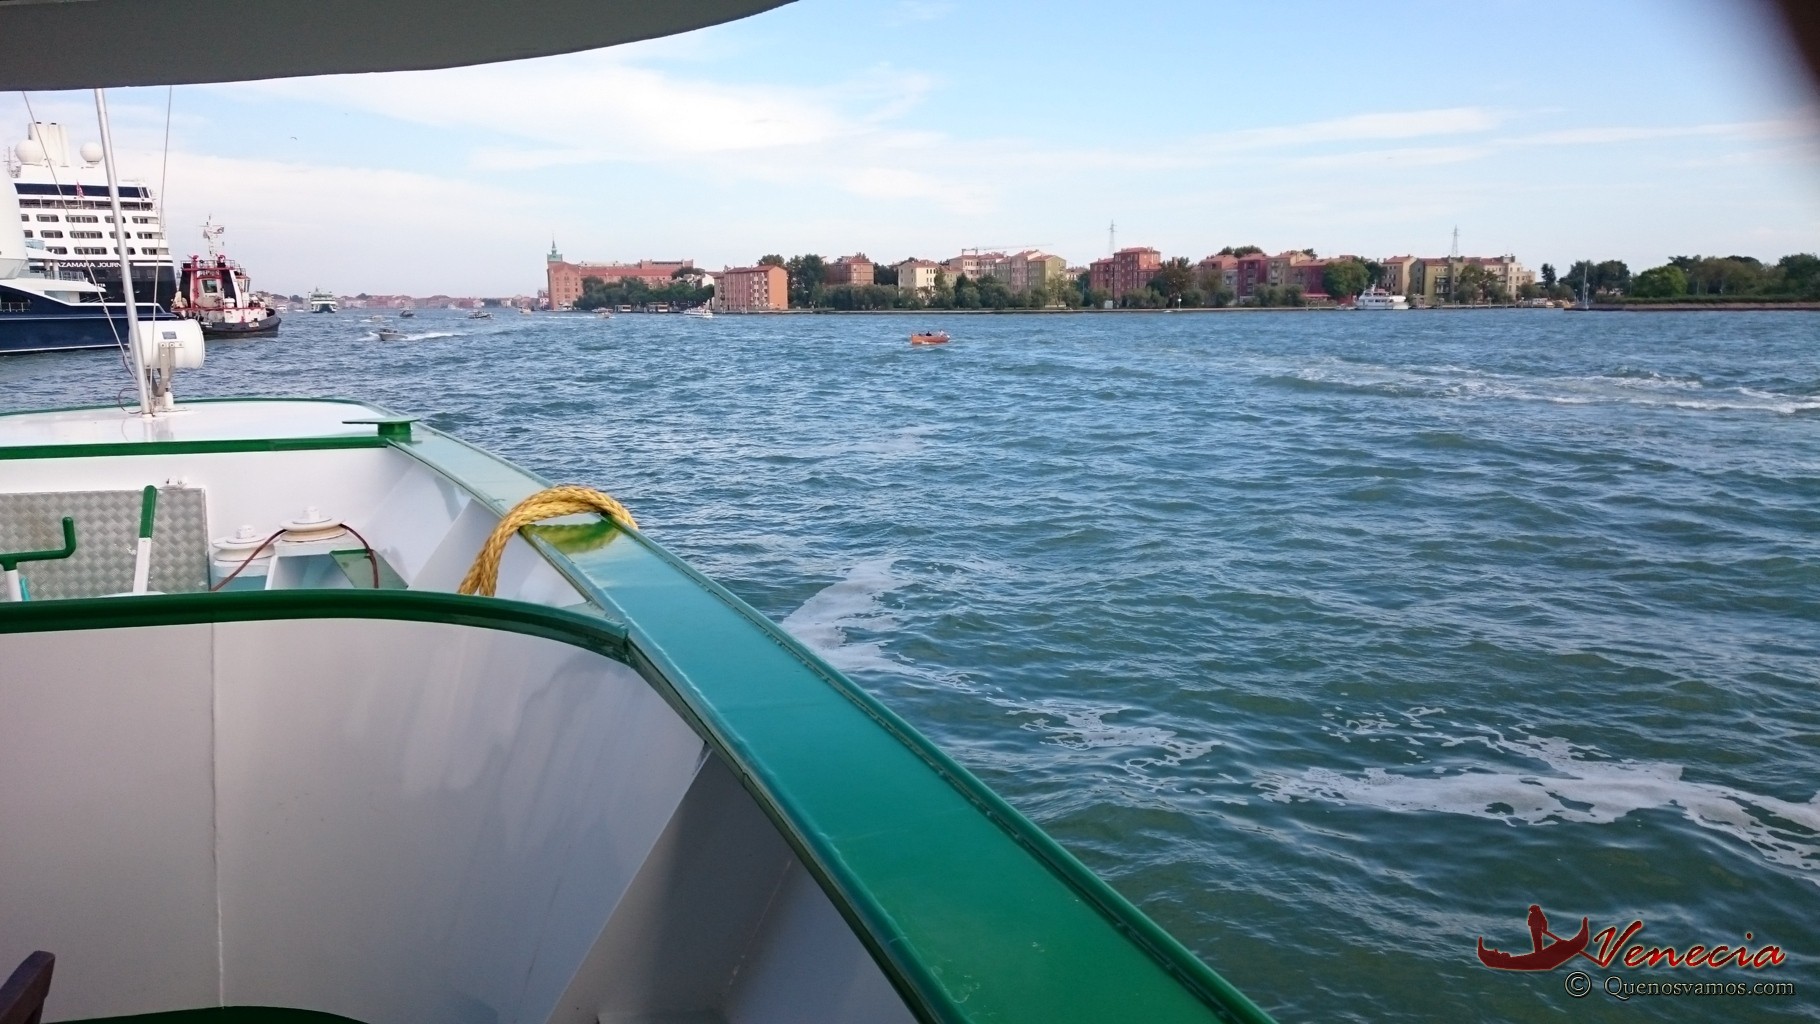 Crucero por la laguna de Venecia